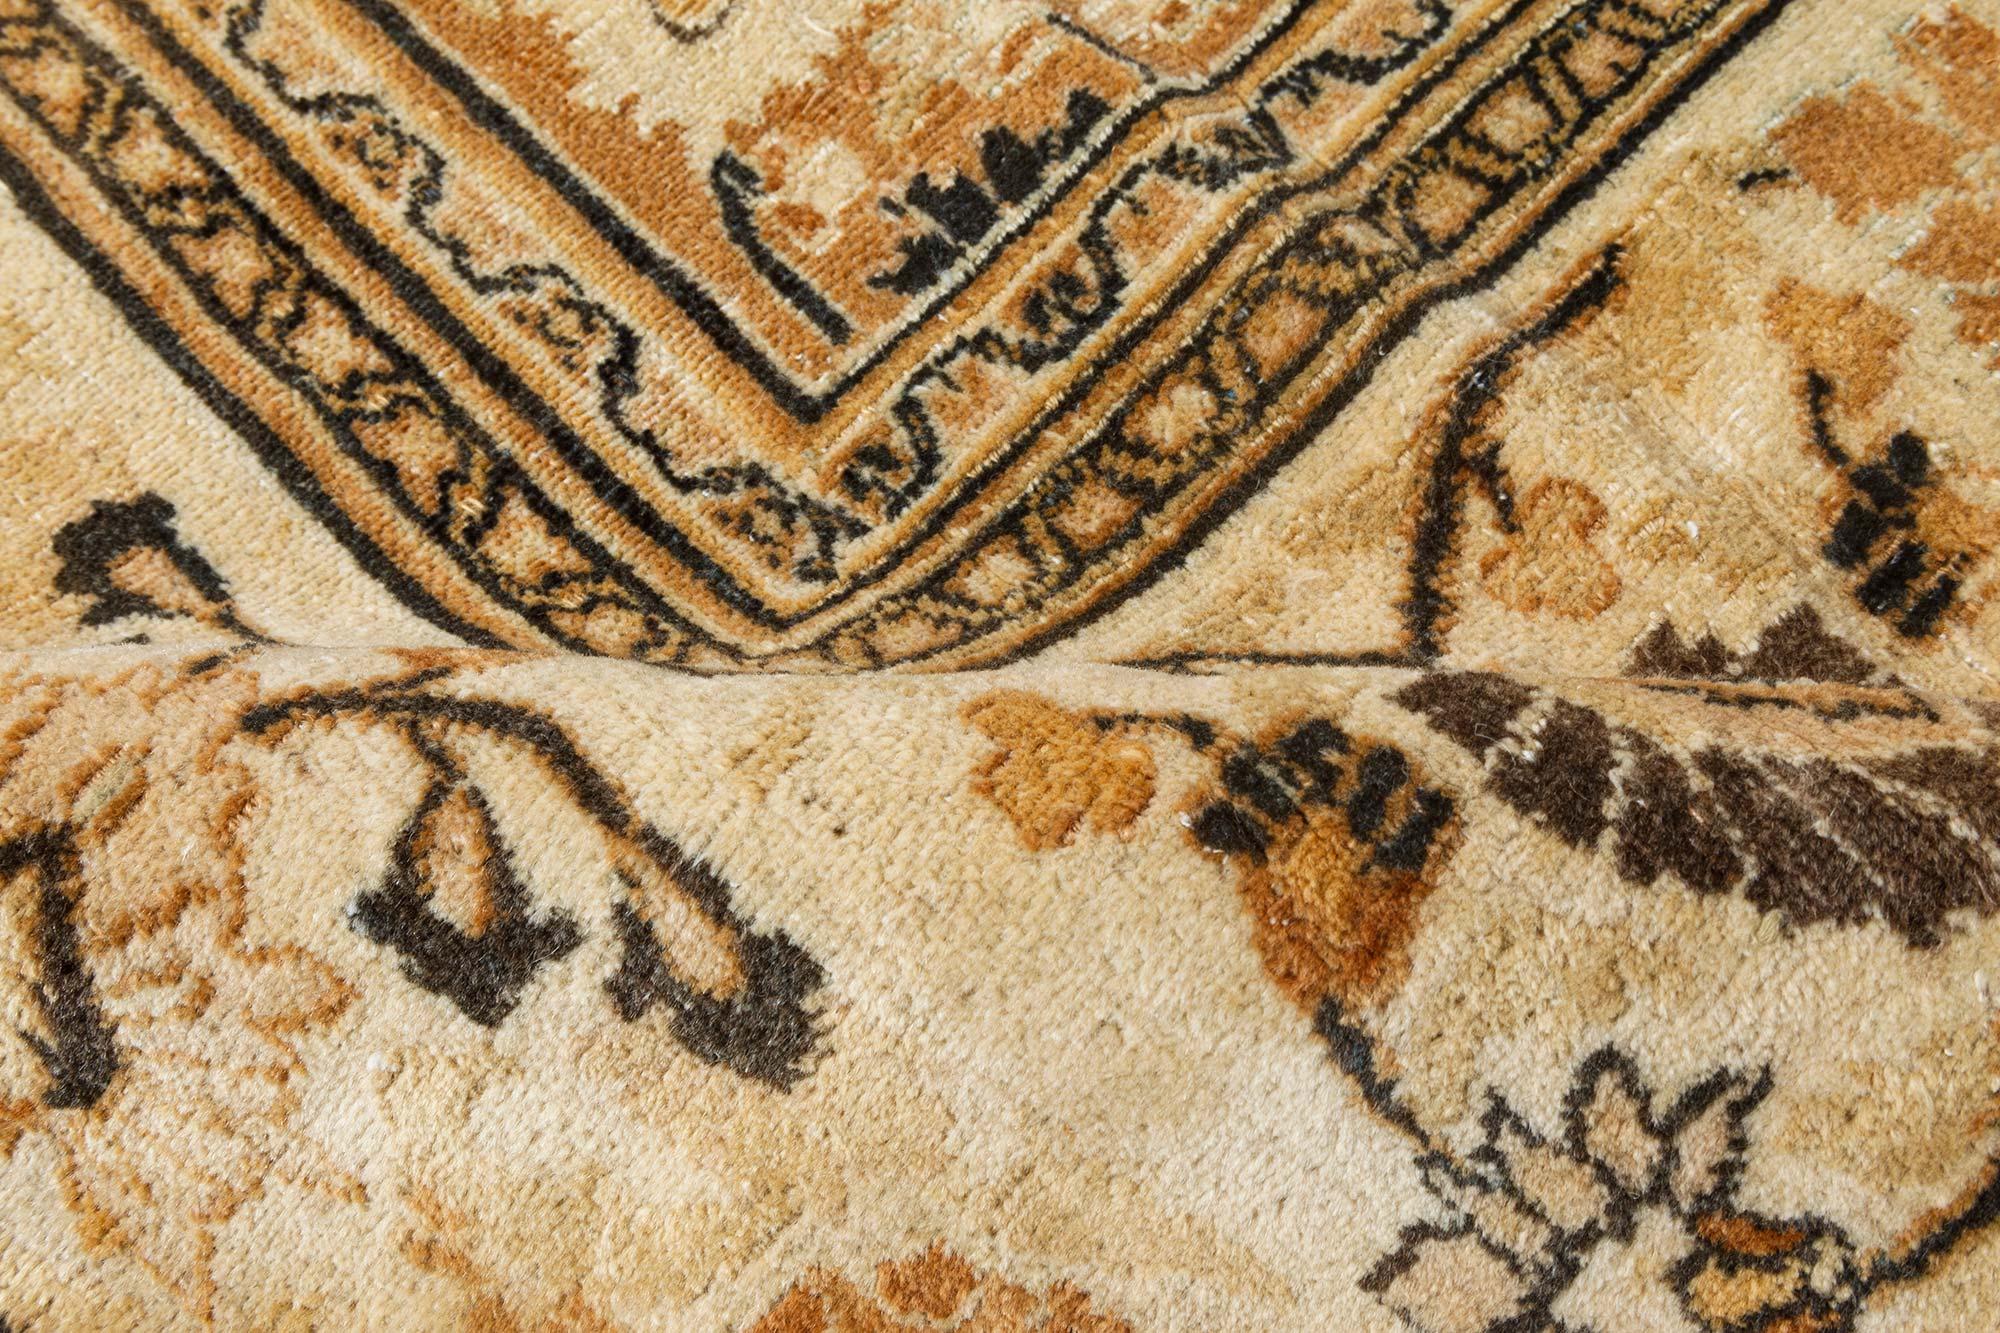 Antique Persian Mashad Handmade Wool Rug
Size: 11'10